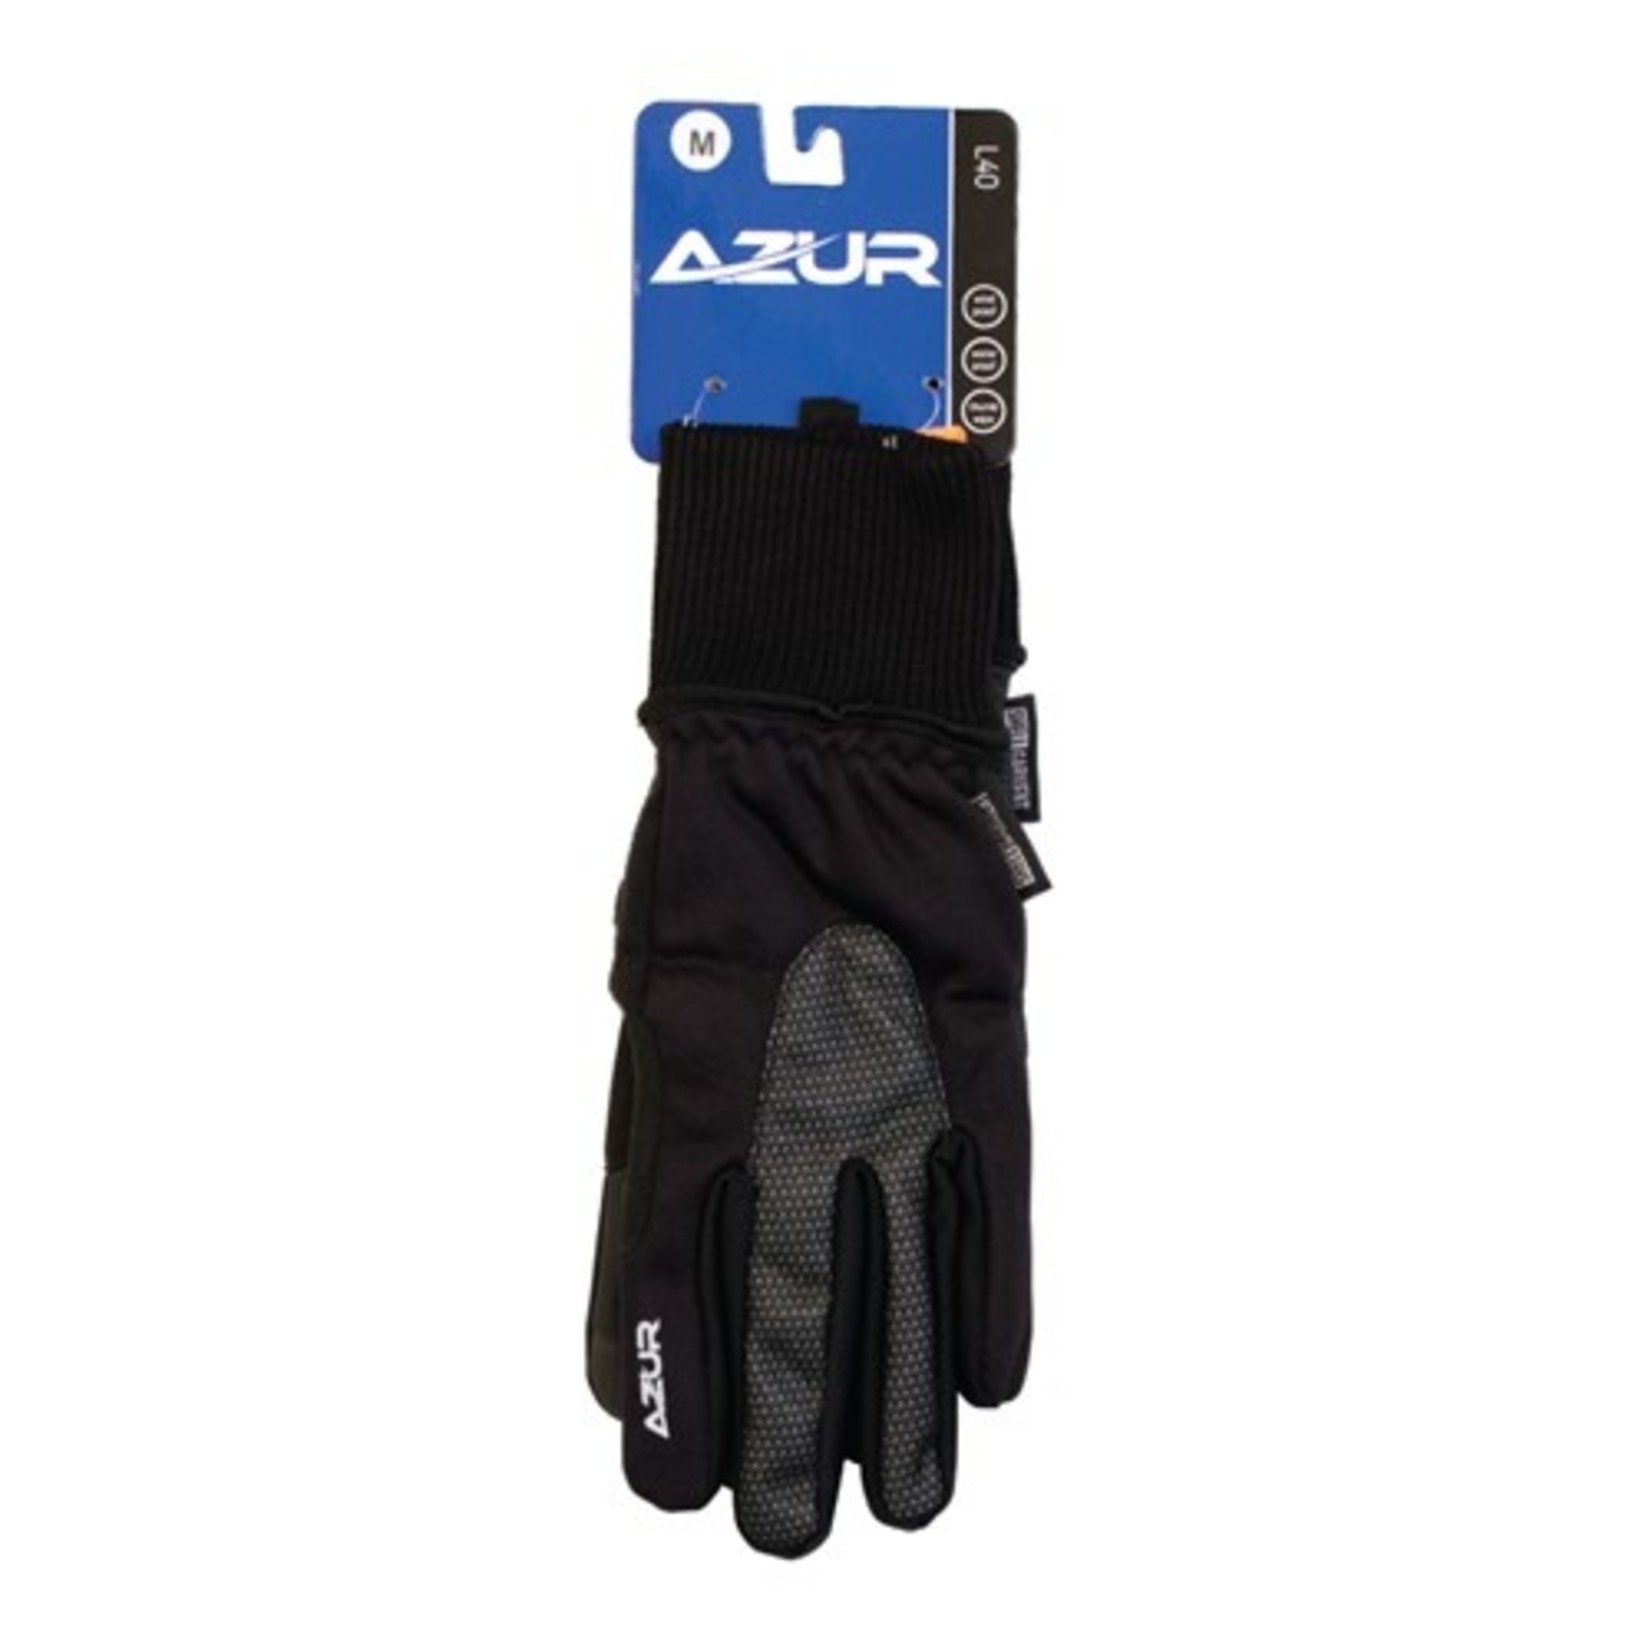 Azur Azur Bike/Cycling Waterproof Gloves - L40 Series - Black